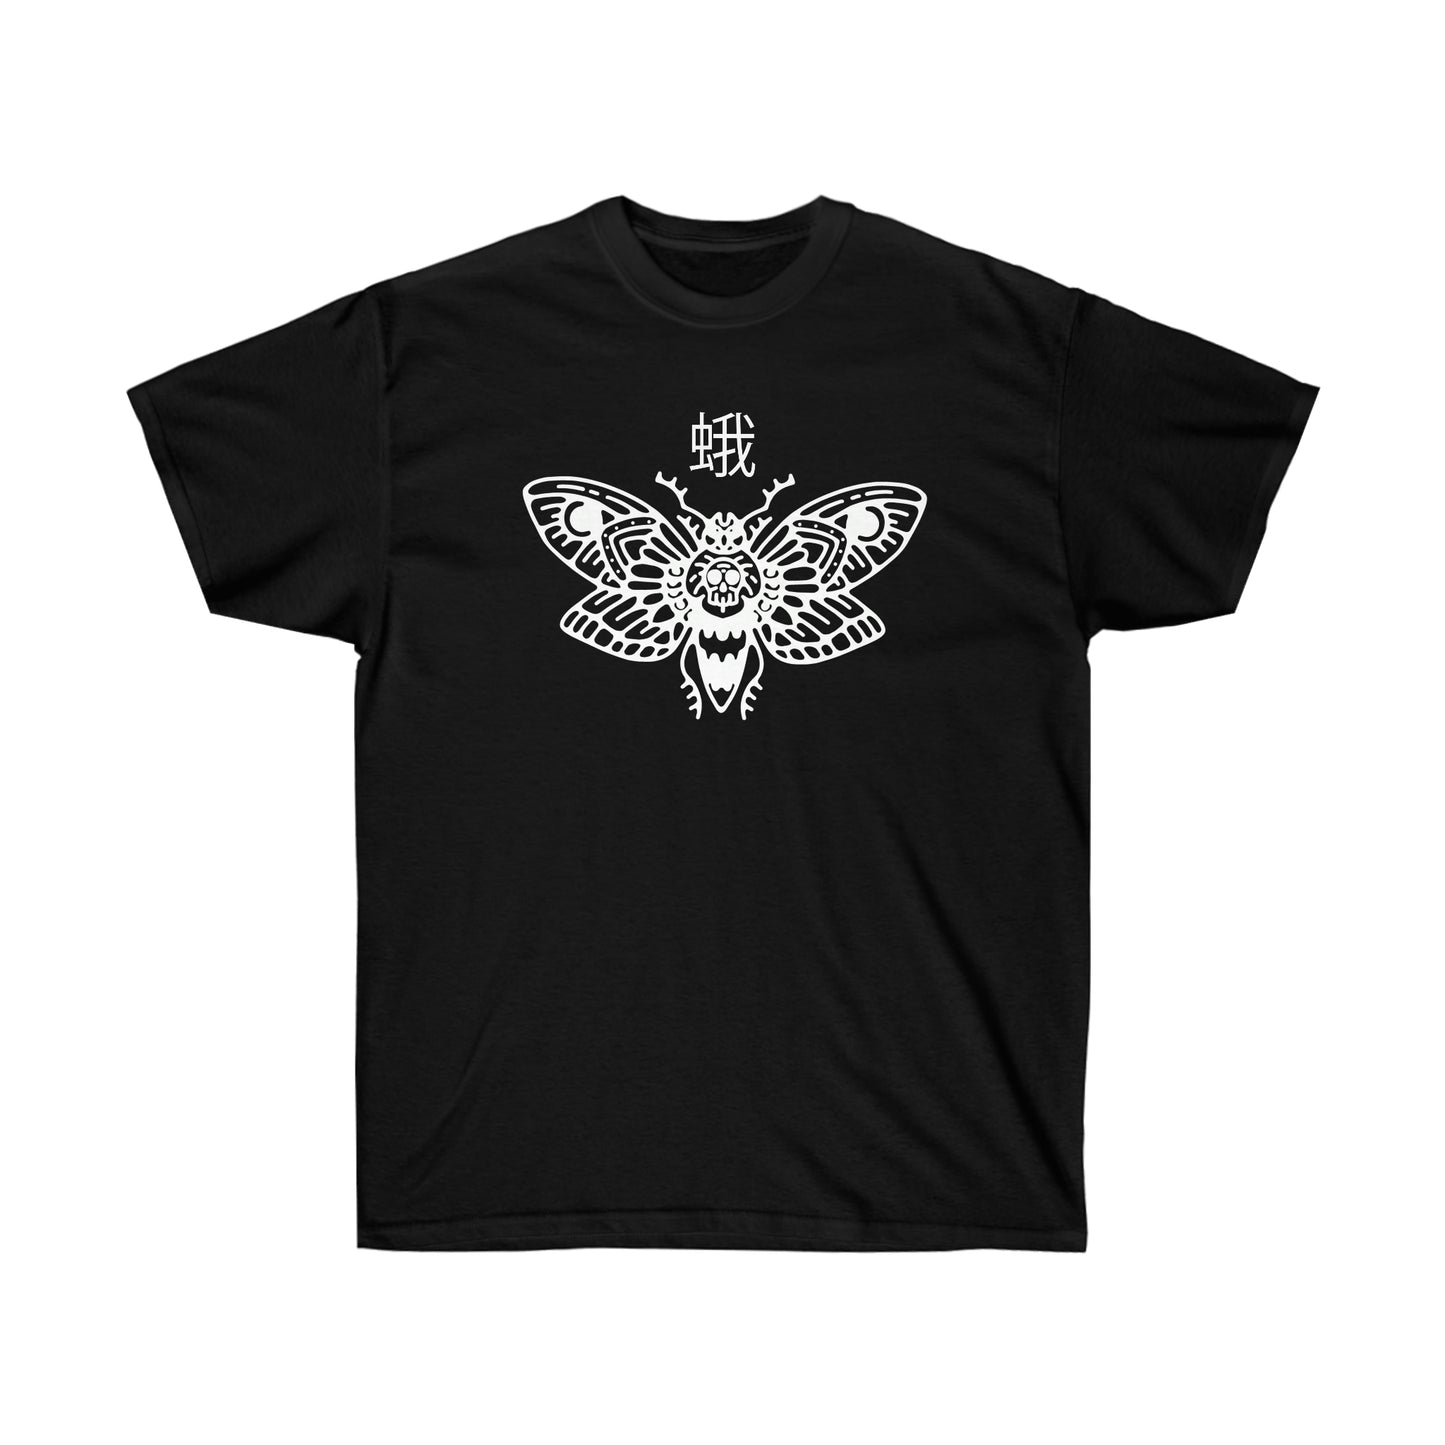 Death Moth shirt Alternative Clothing, Grunge T-shirt death J-Fashion Top Goth Japan Streetwear Edgy Clothes, Japanese Apparel Metal E-girl